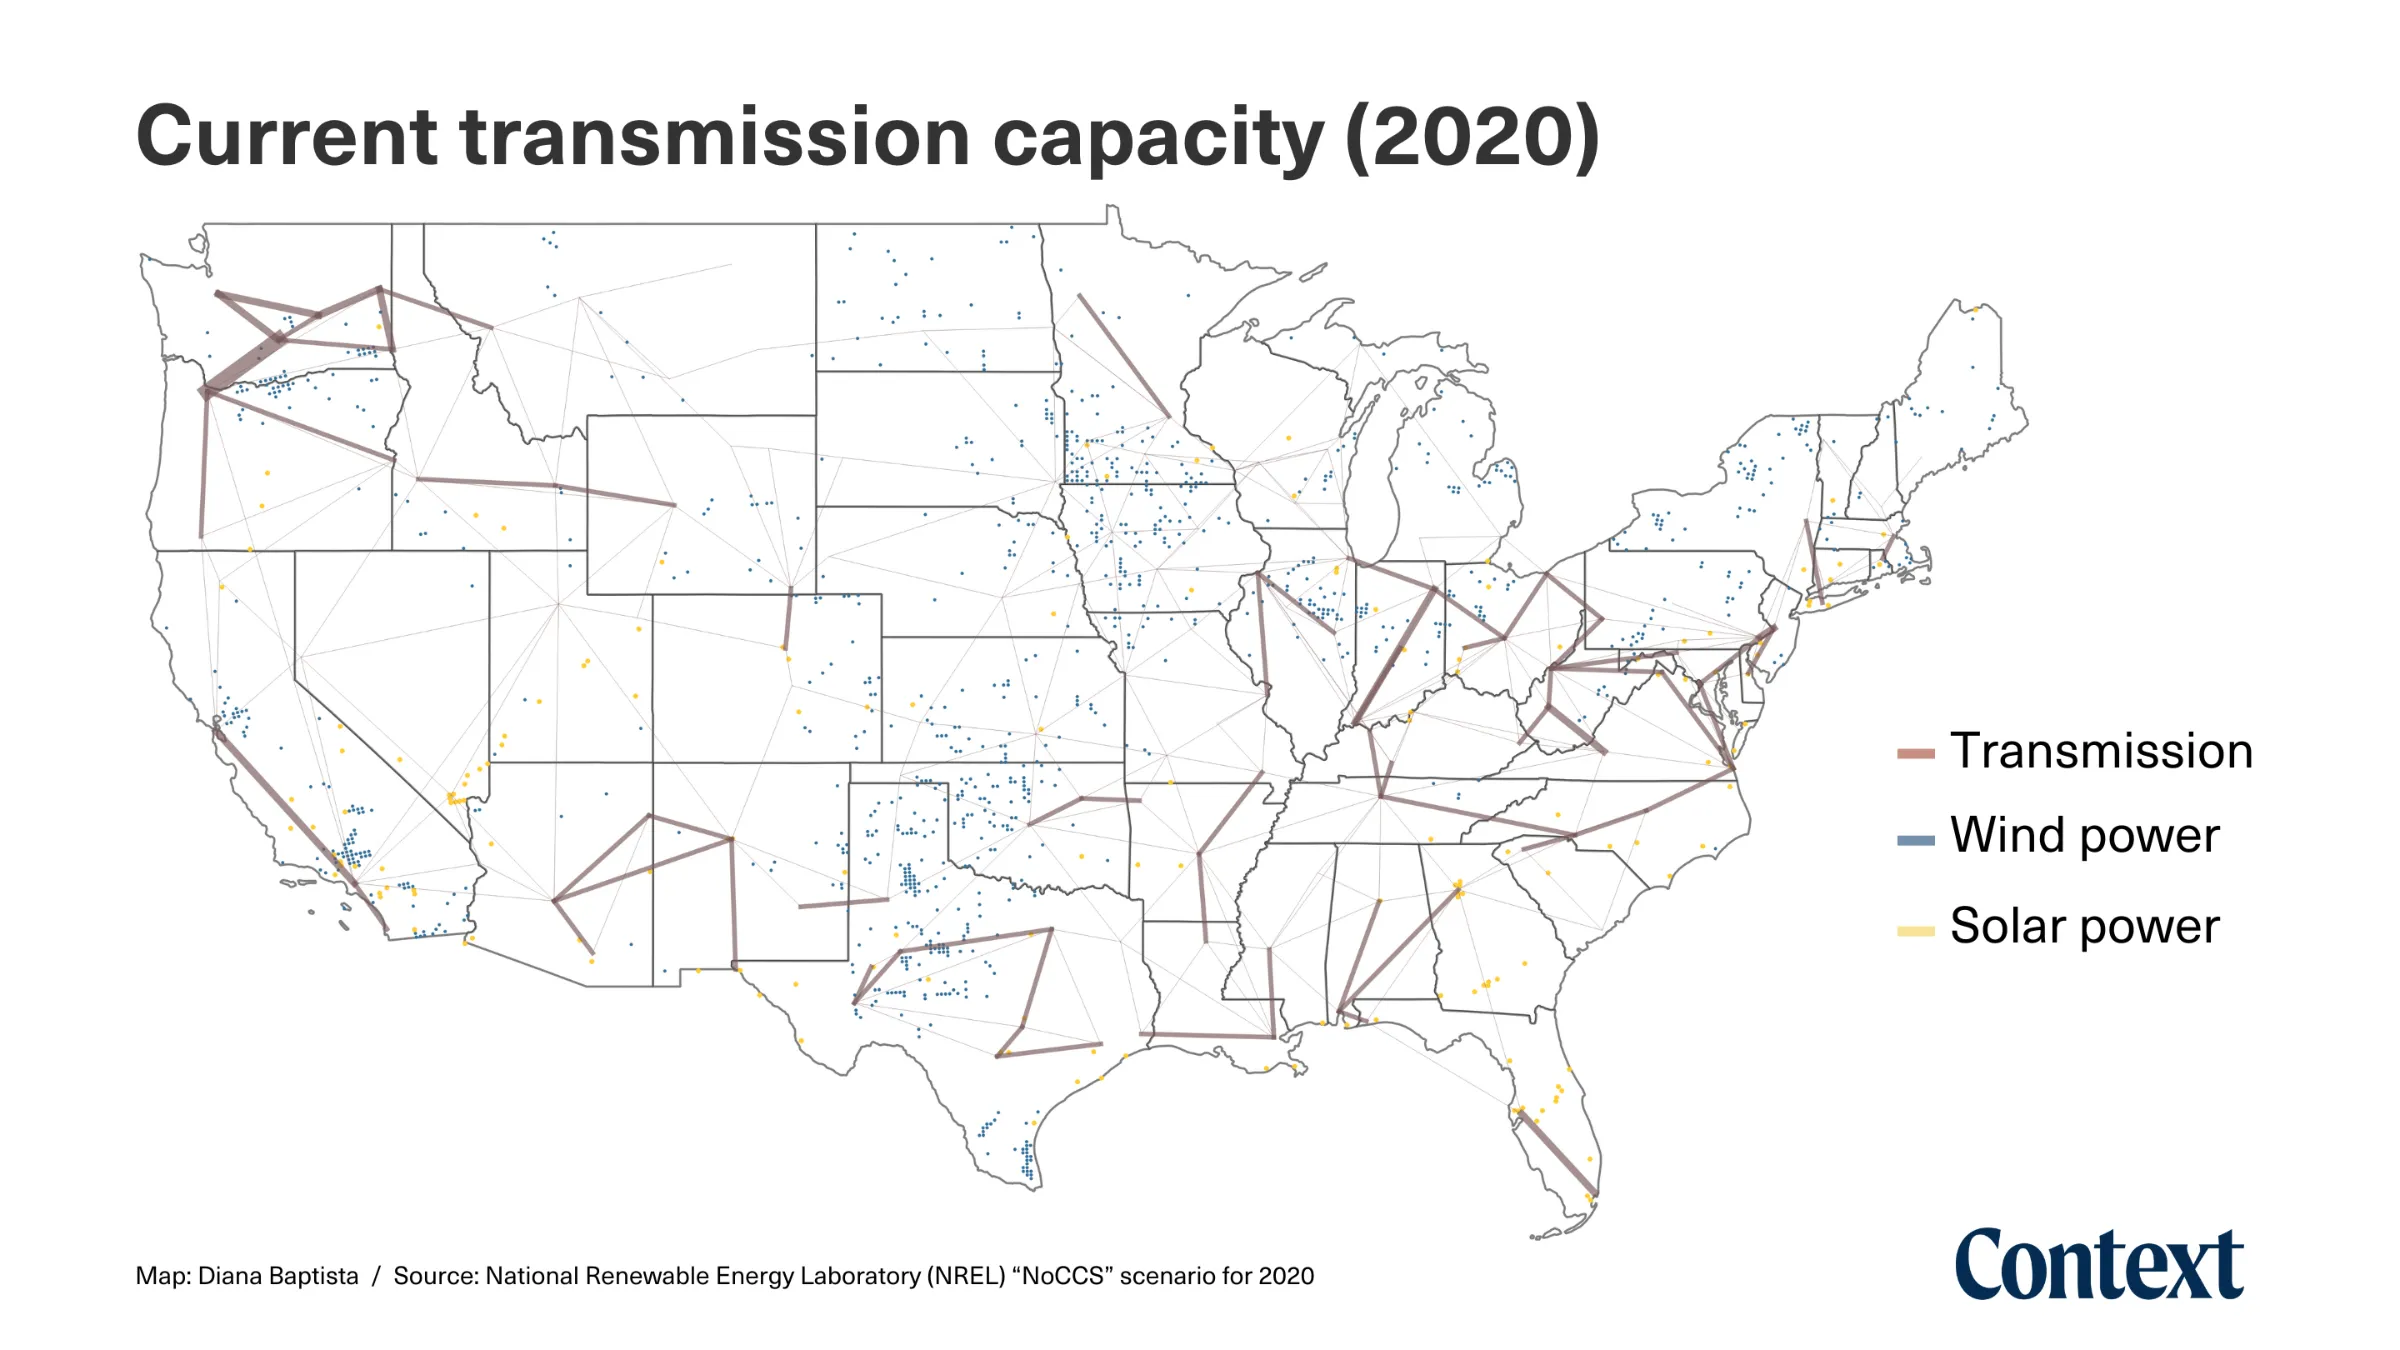 Current transmission capacity (2020). Source: National Renewable Energy Laboratory (NREL) 'NoCCS' scenario for 2020.